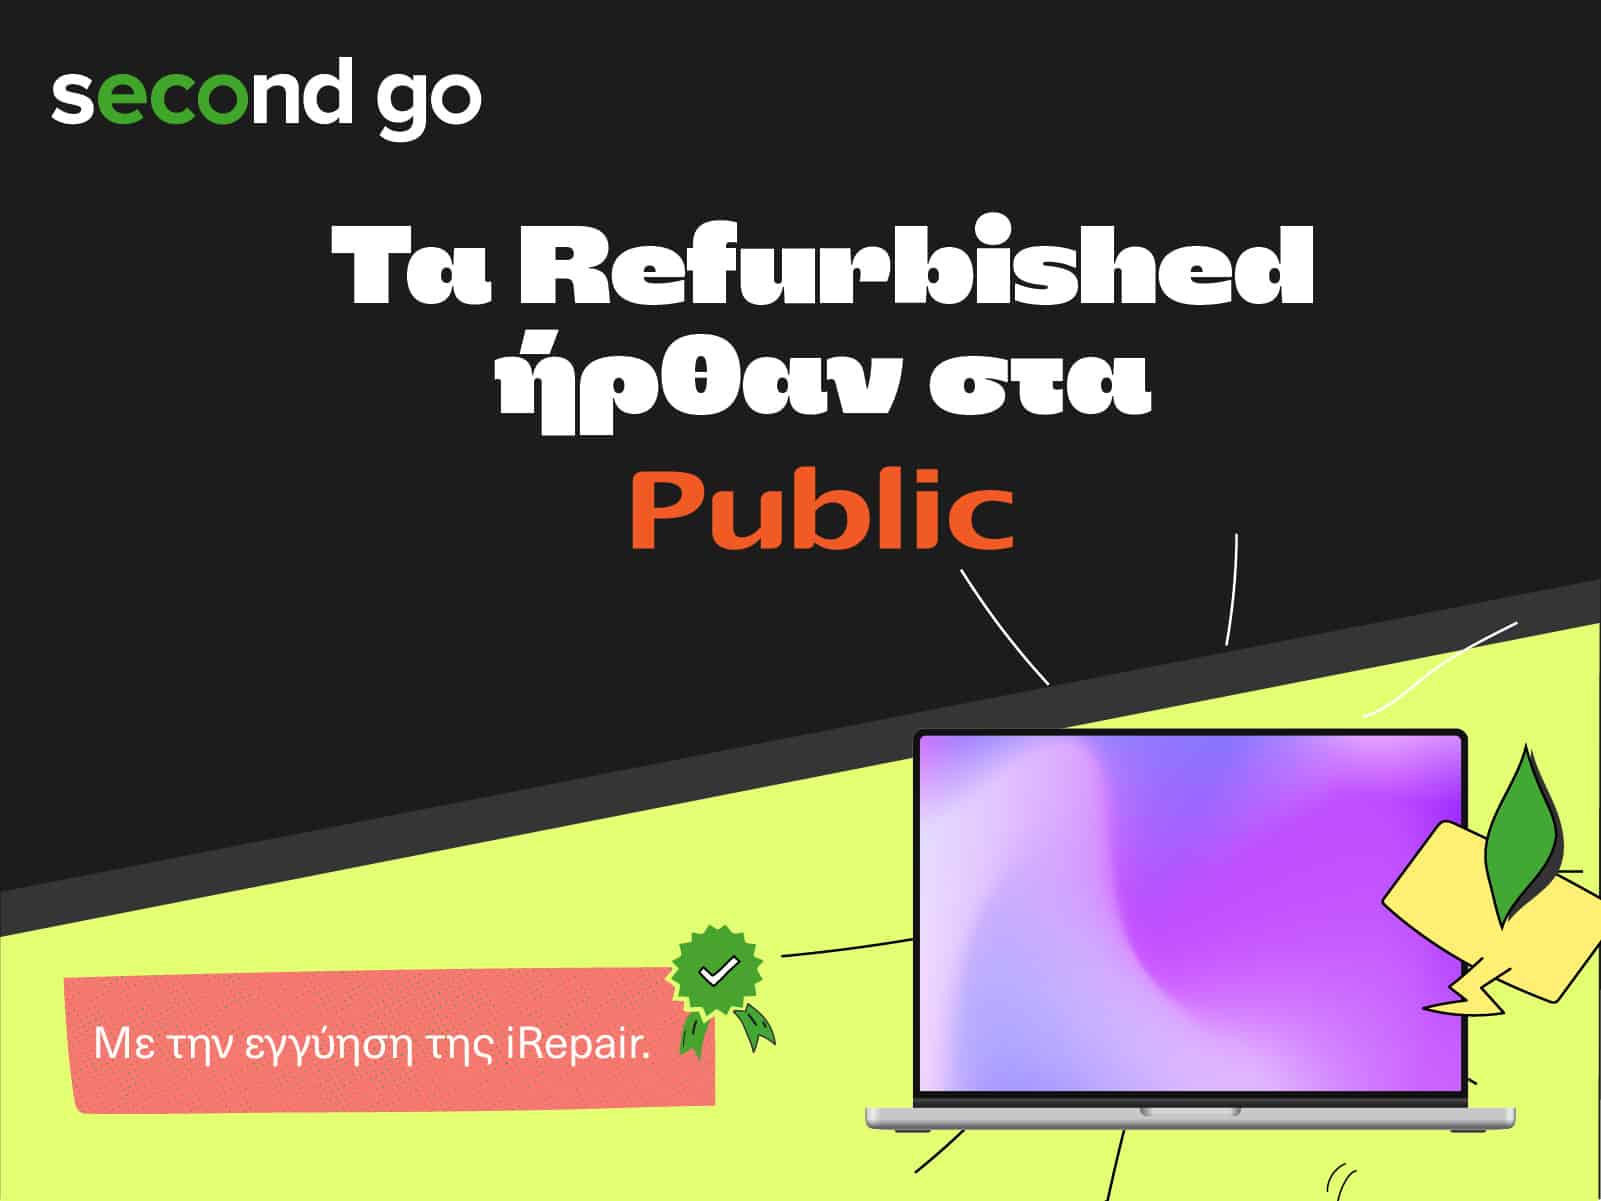 Public refurbished, Public “second go”: Refurbished smartphones και tablets από τους τεχνικούς των iRepair